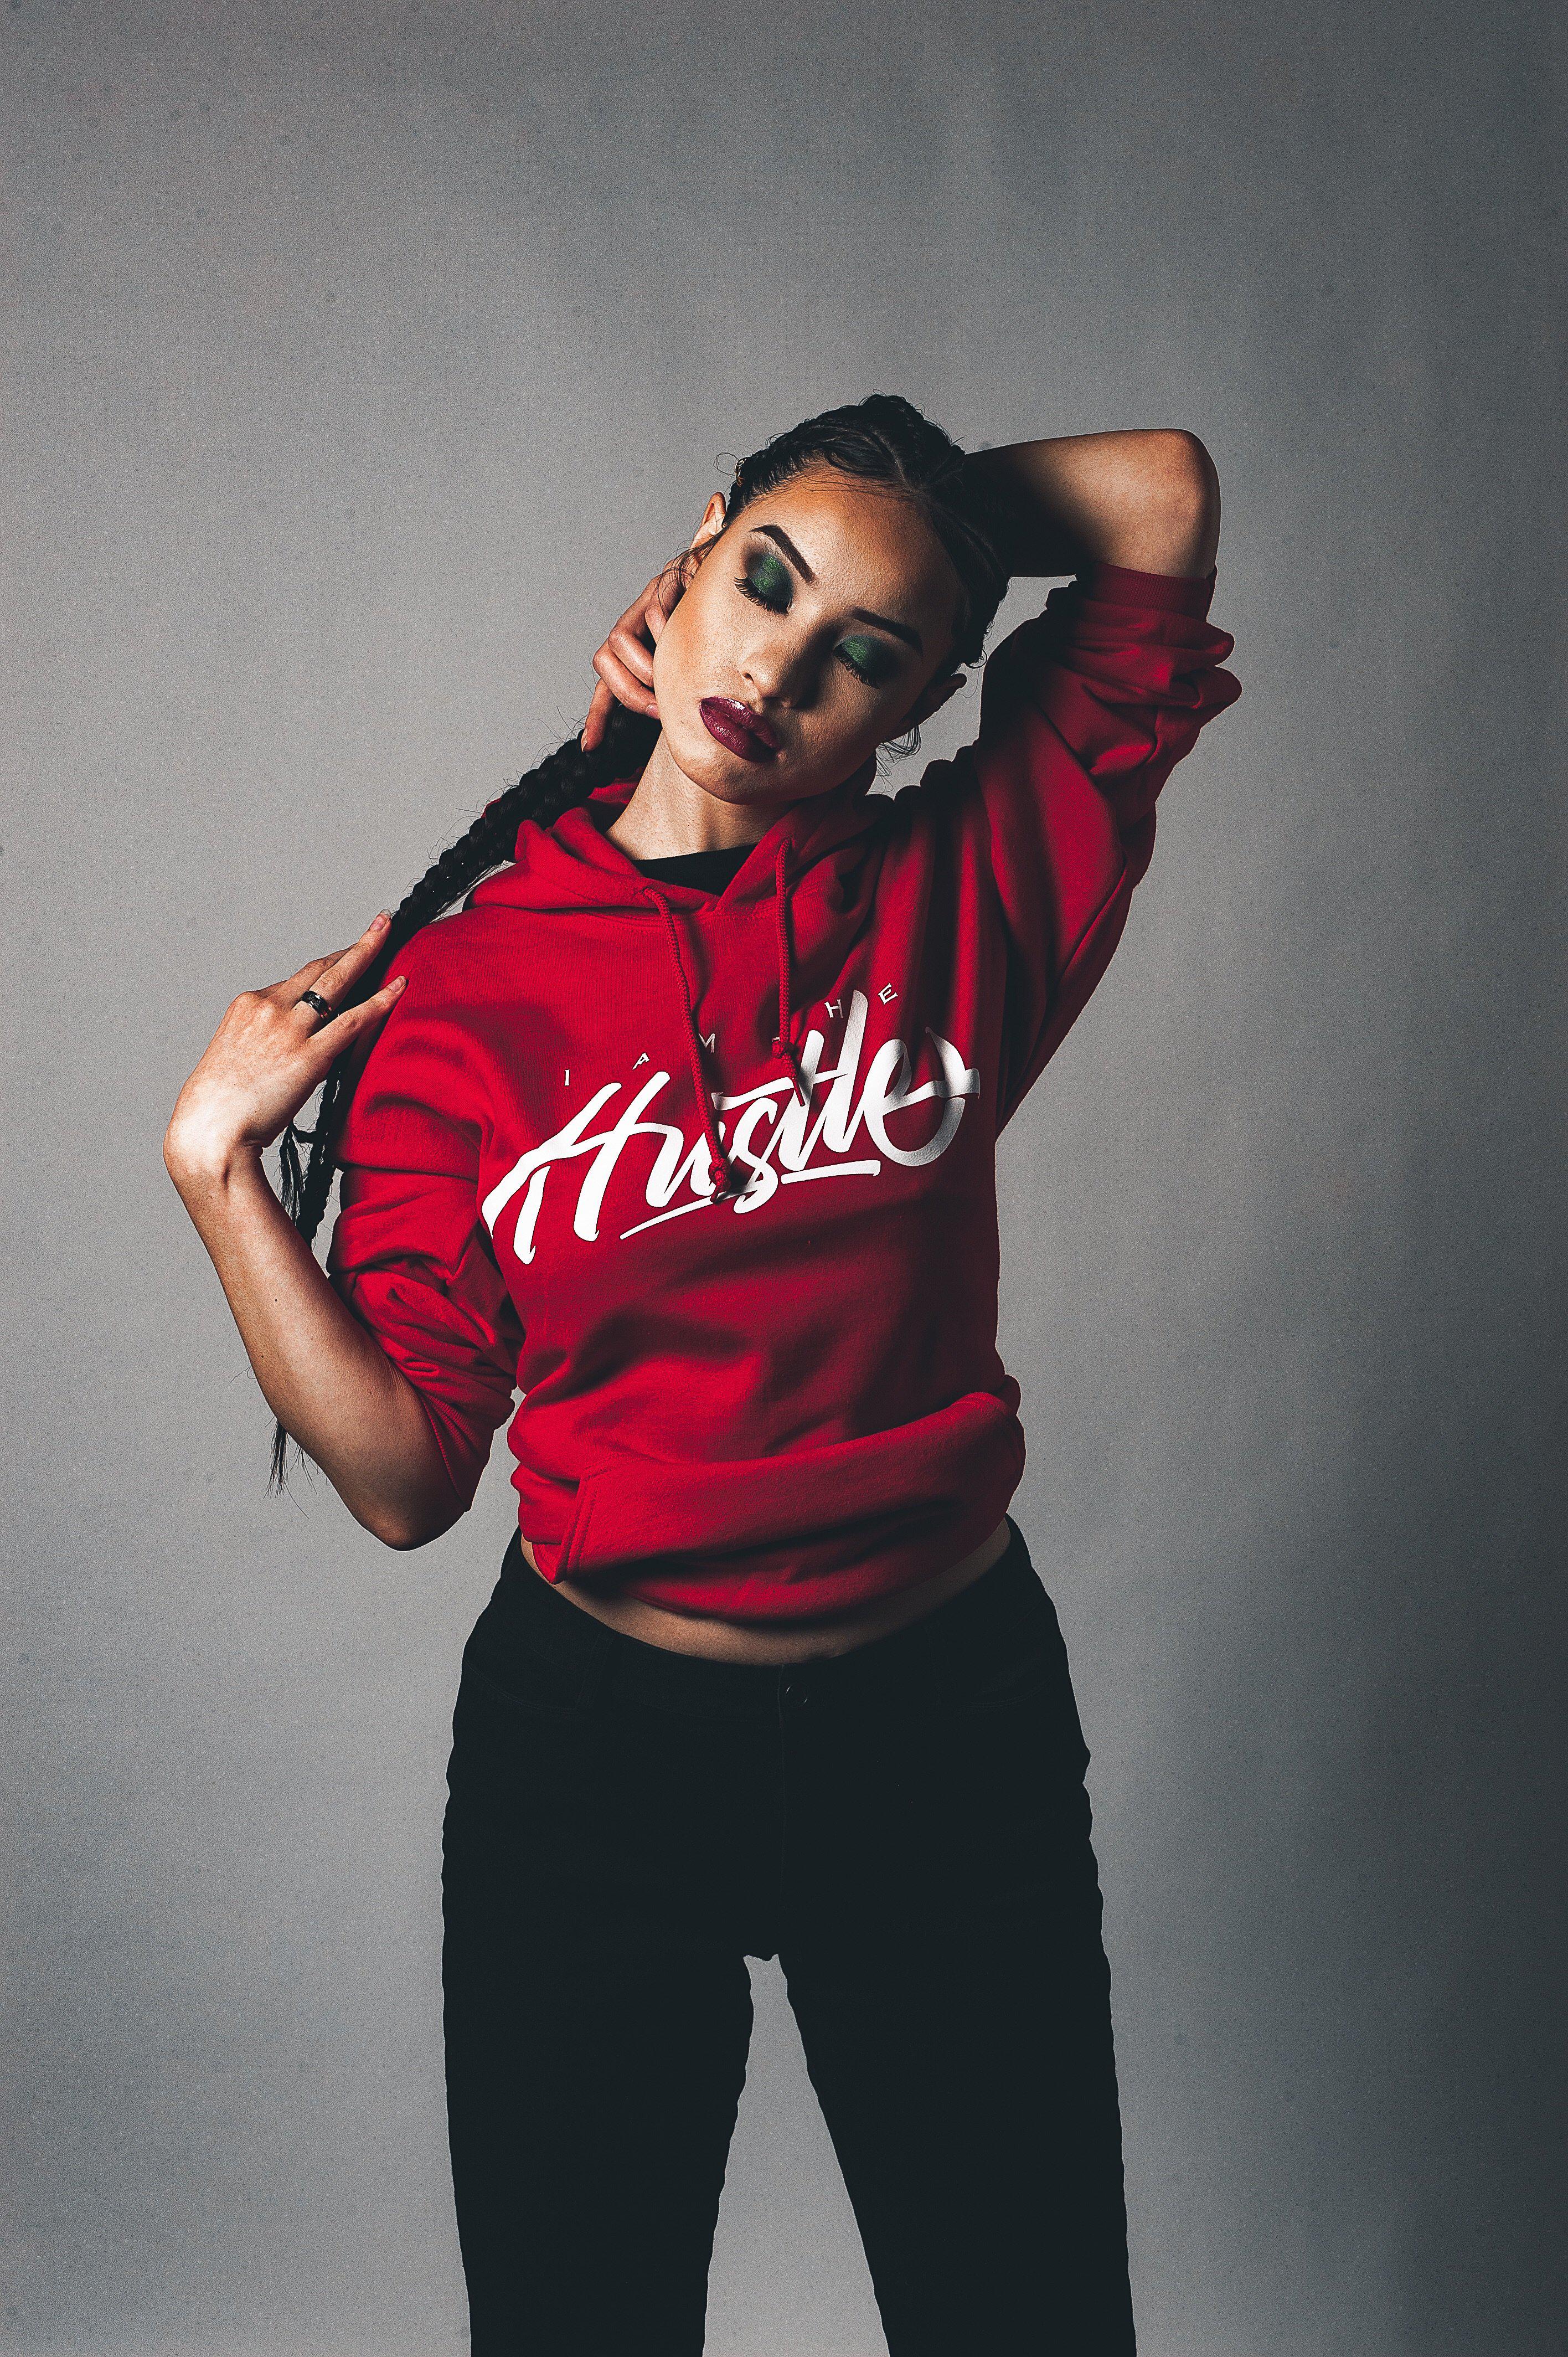 I Am The Hustle Graffito - Red Hoodie (Heavy Blend)-money_motivation_brand